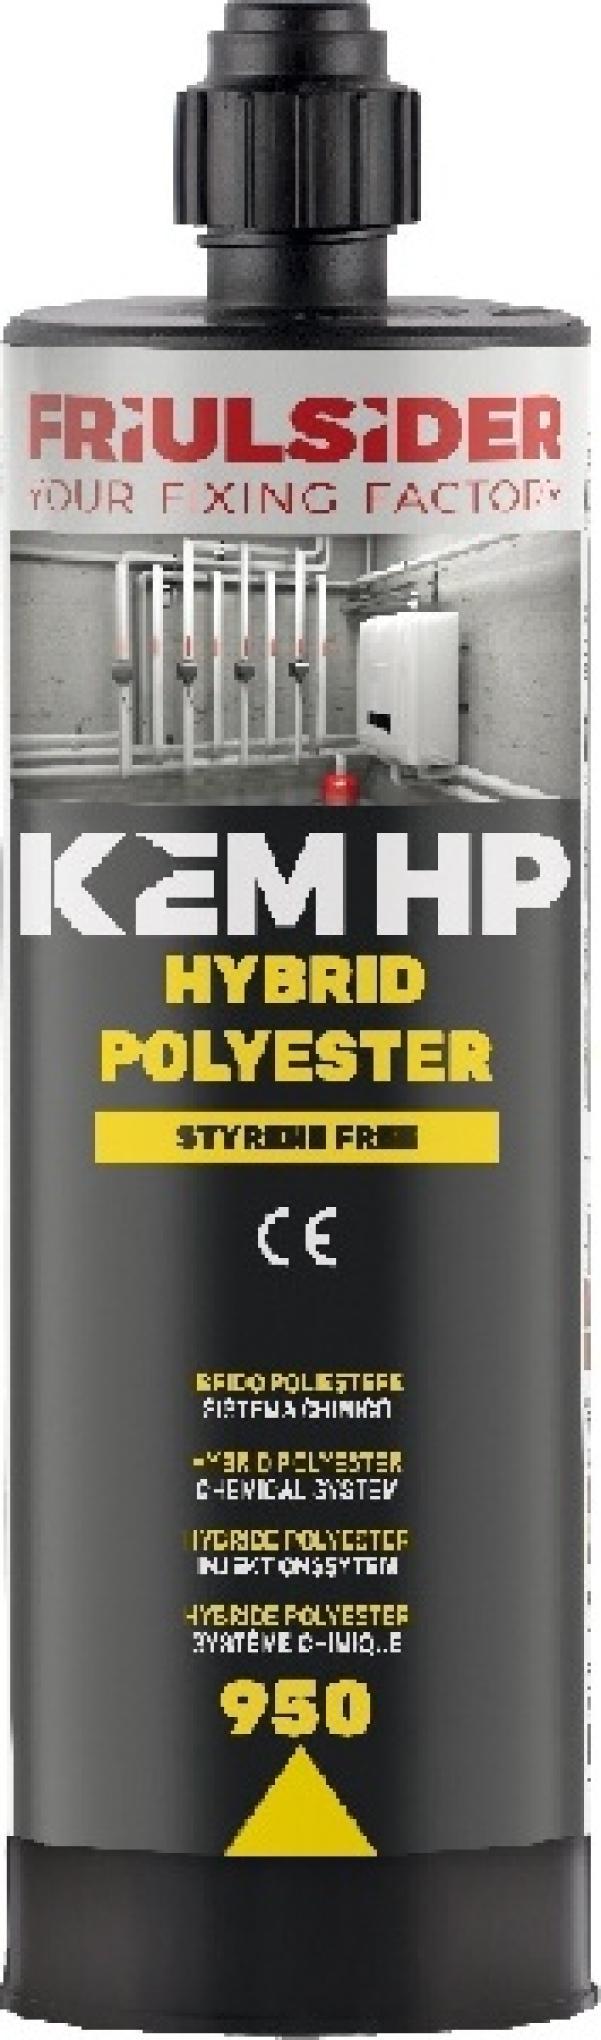 KEM HP HYBRID POLYESTER Fissaggio chimico senza stirene Friulsider 9500600000000